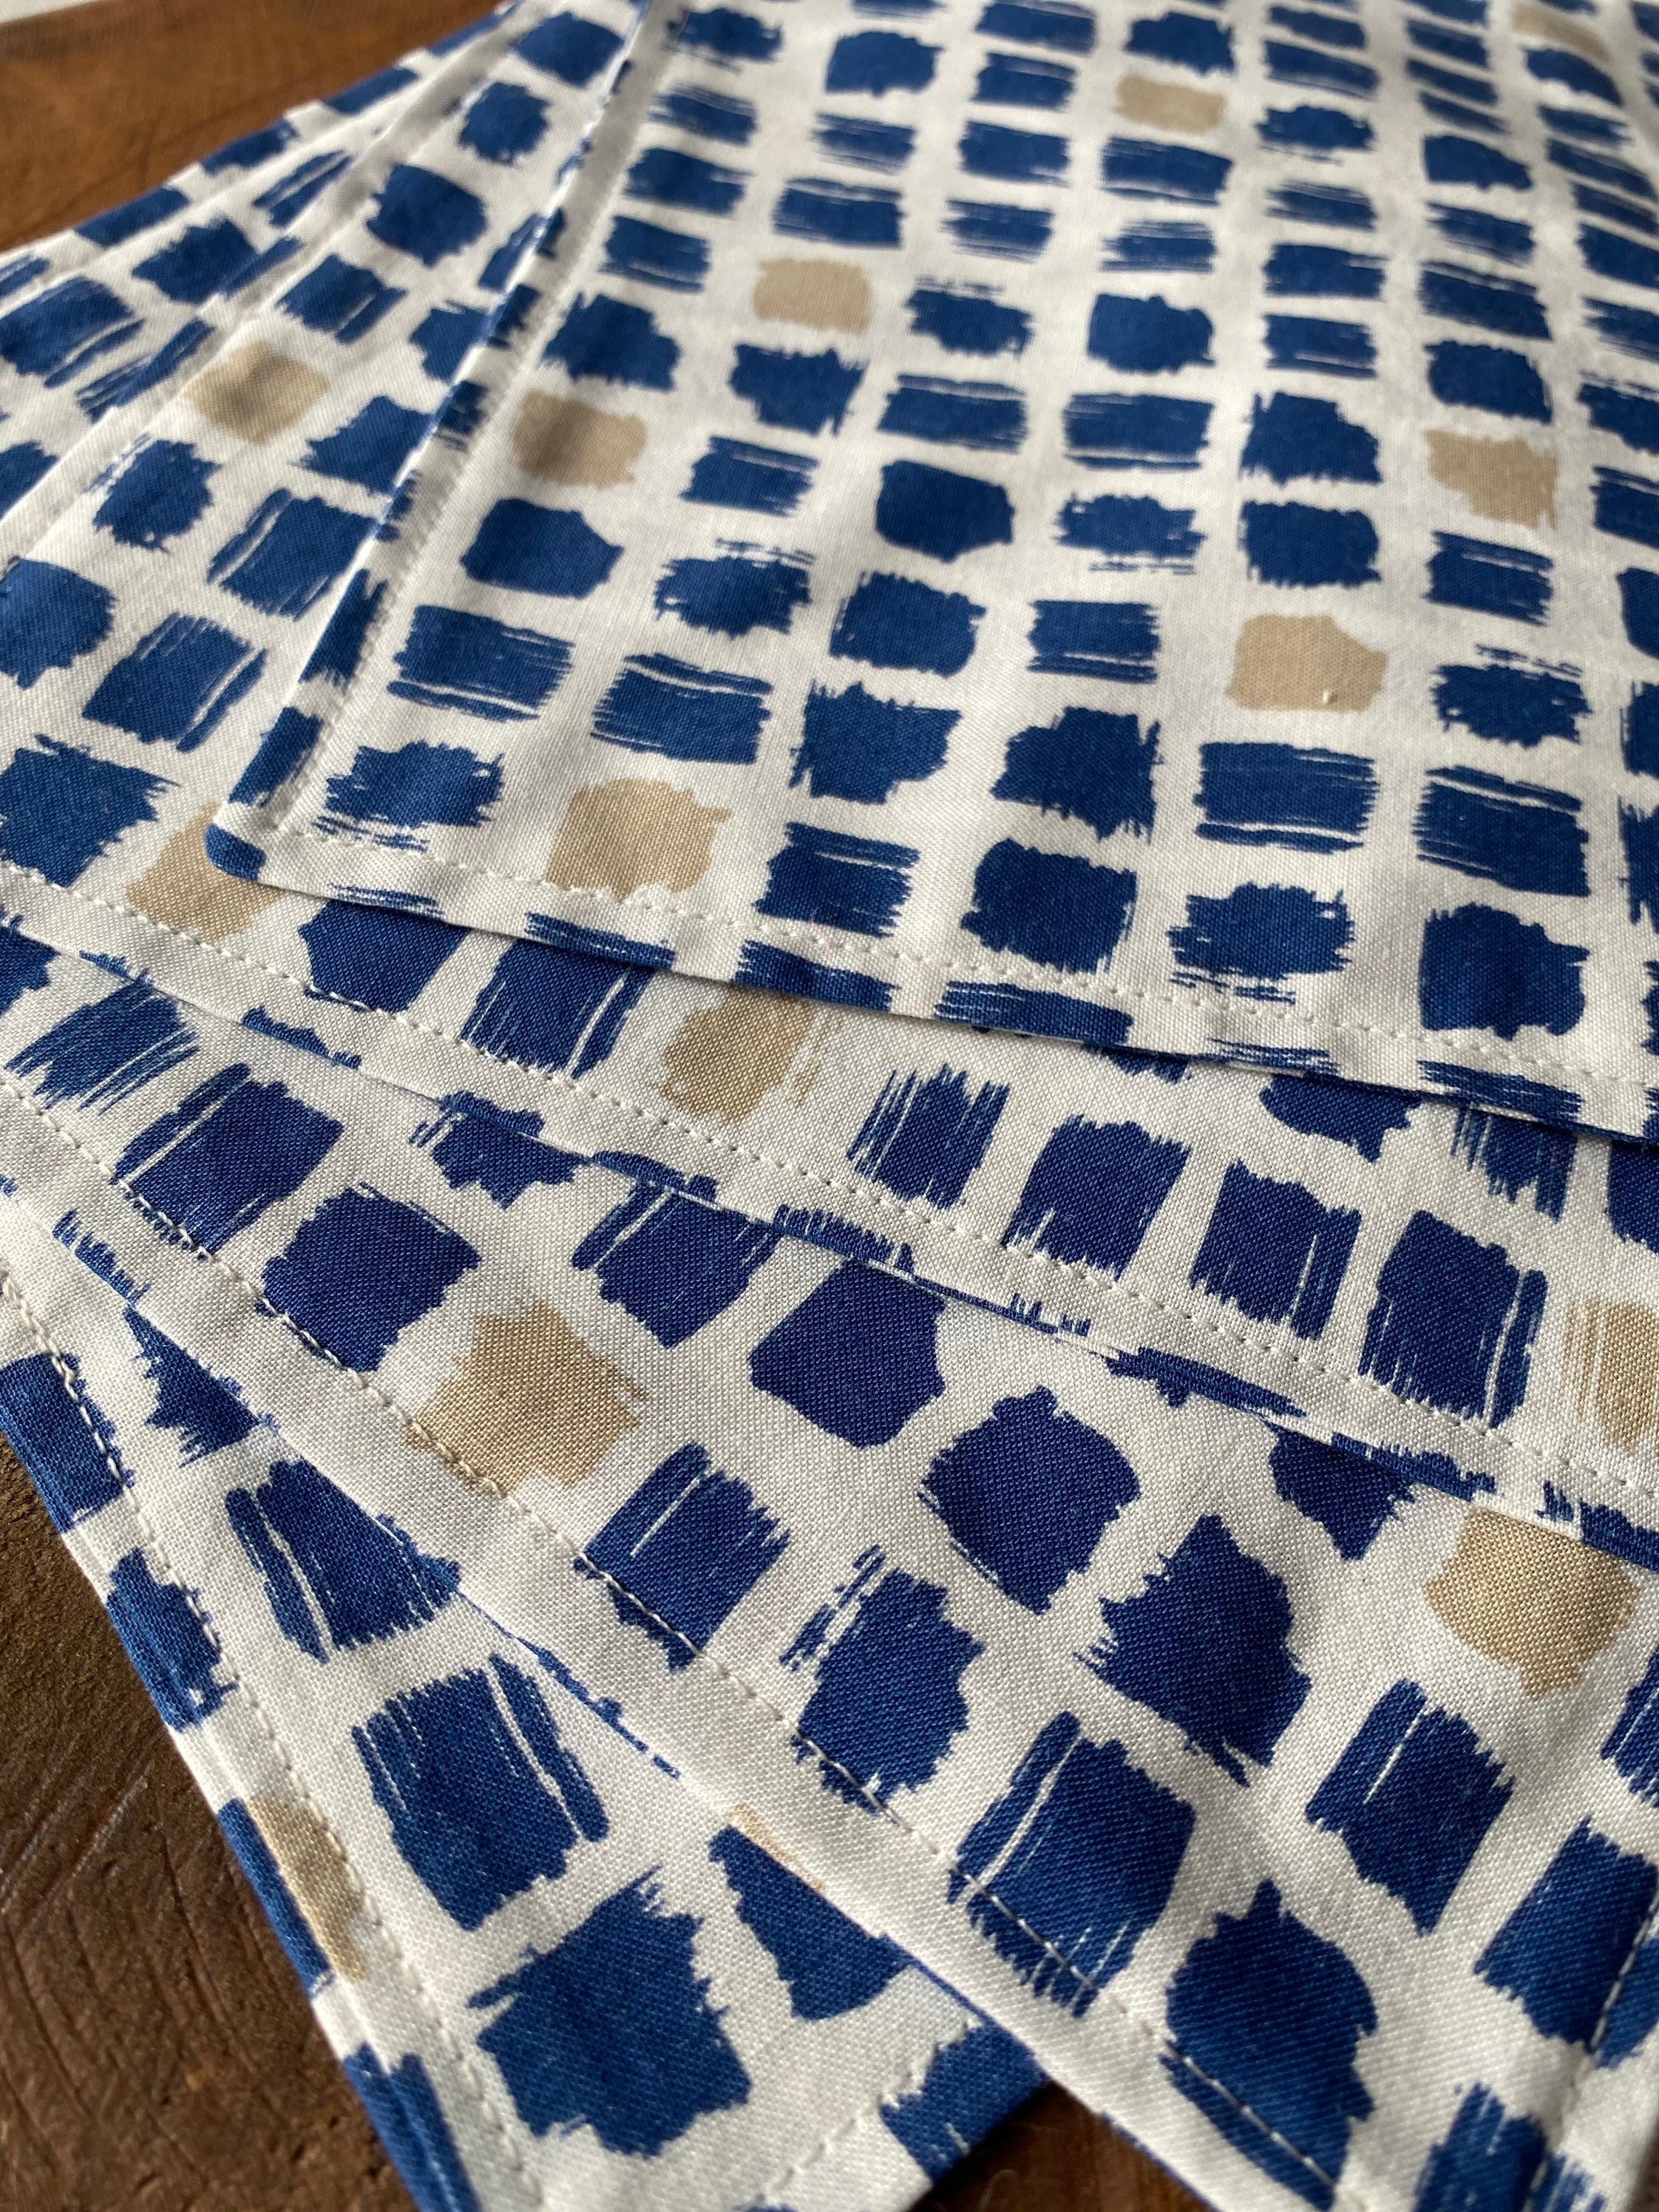 Color Block Everyday Cloth Napkins, set of 10 – We Fill Good